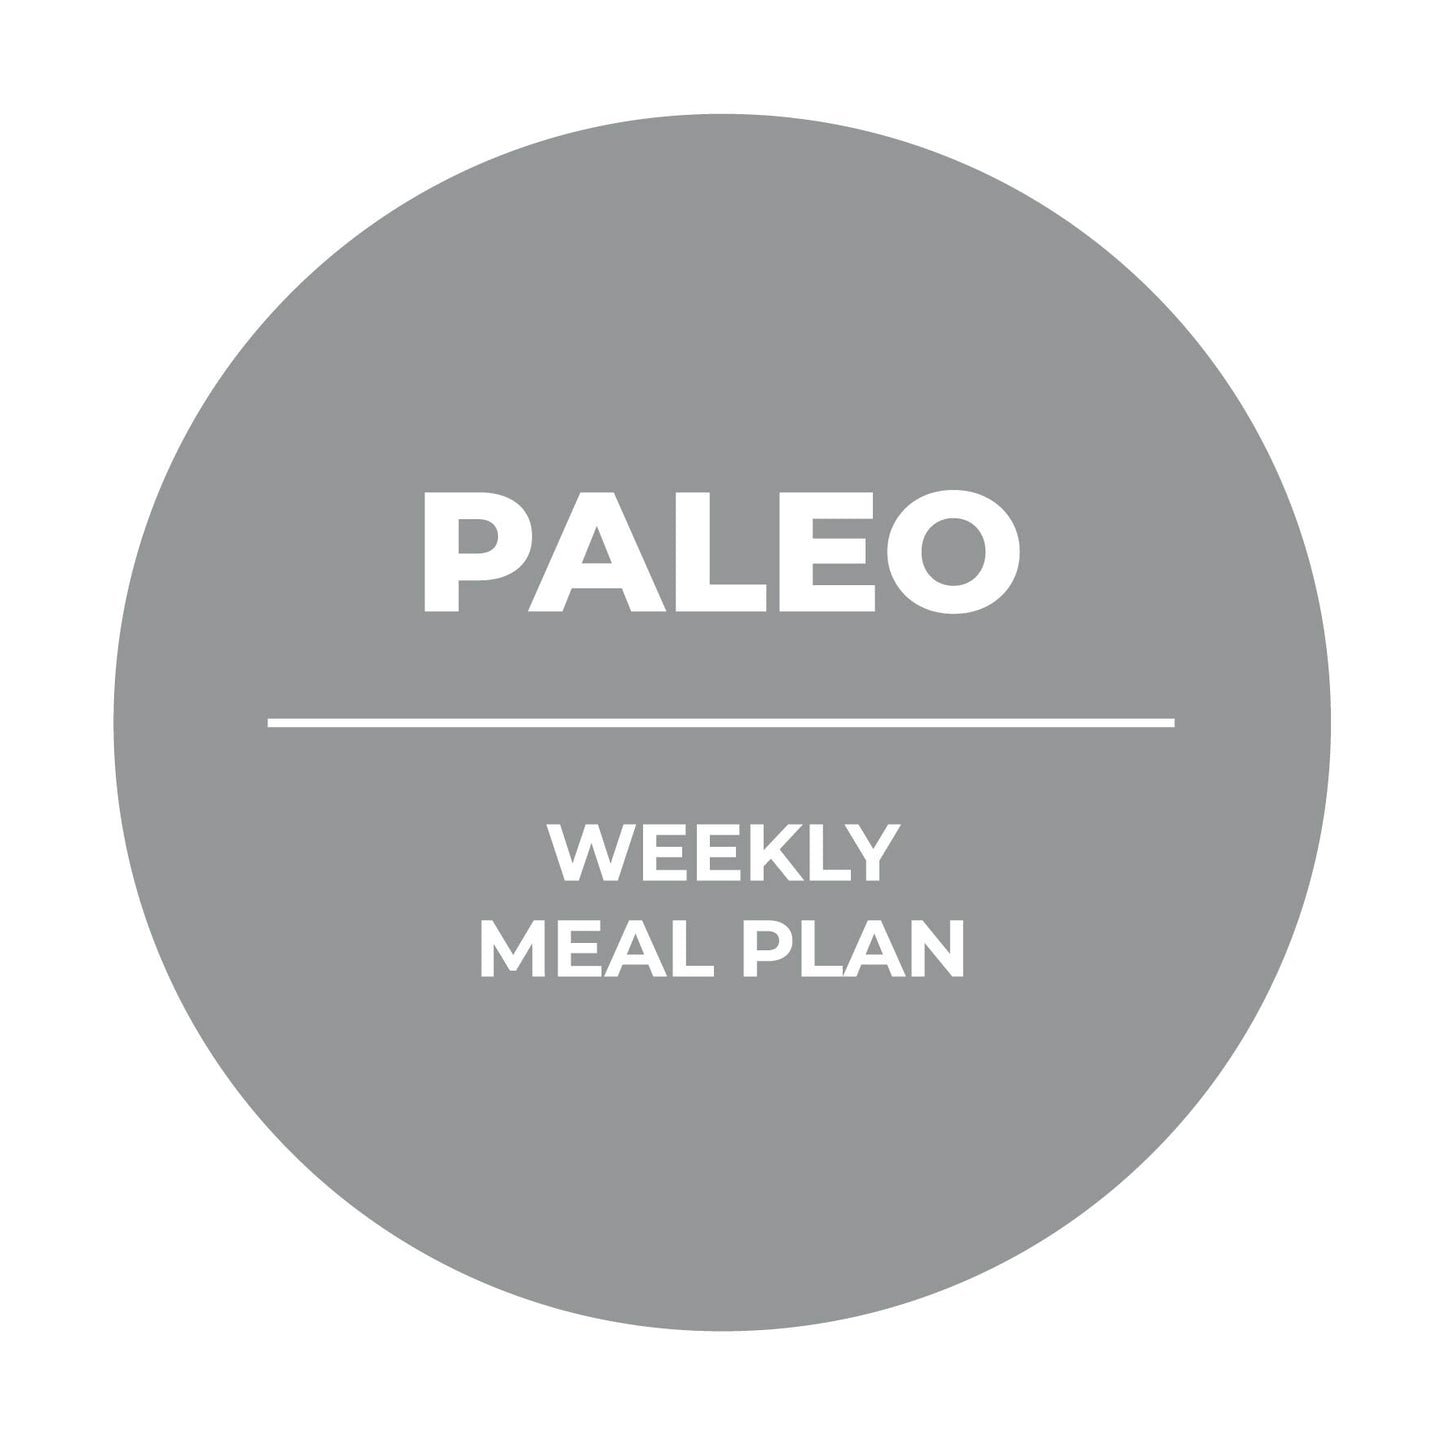 Paleo Weekly Meal Plan in Washington